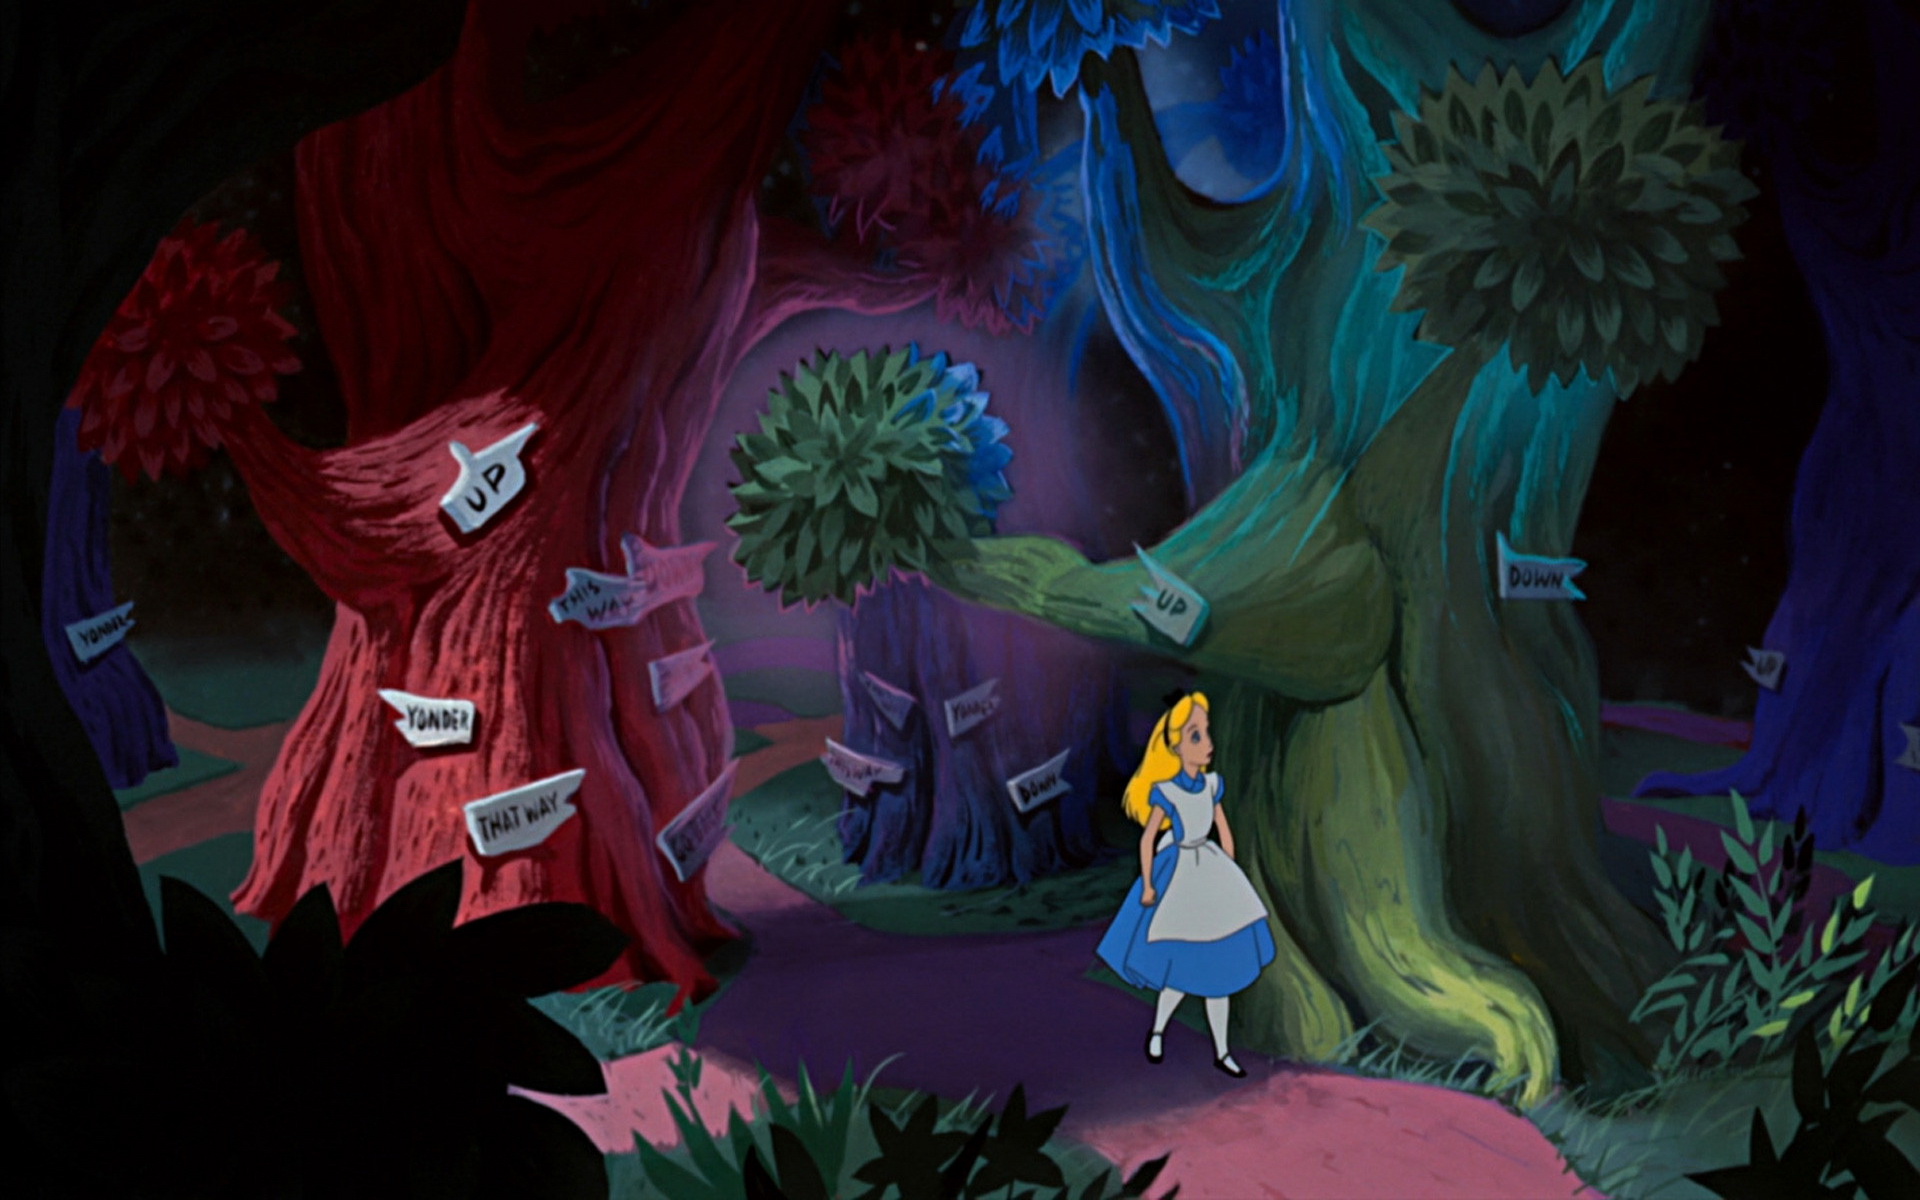 Disney Alice In Wonderland Wallpaper HD